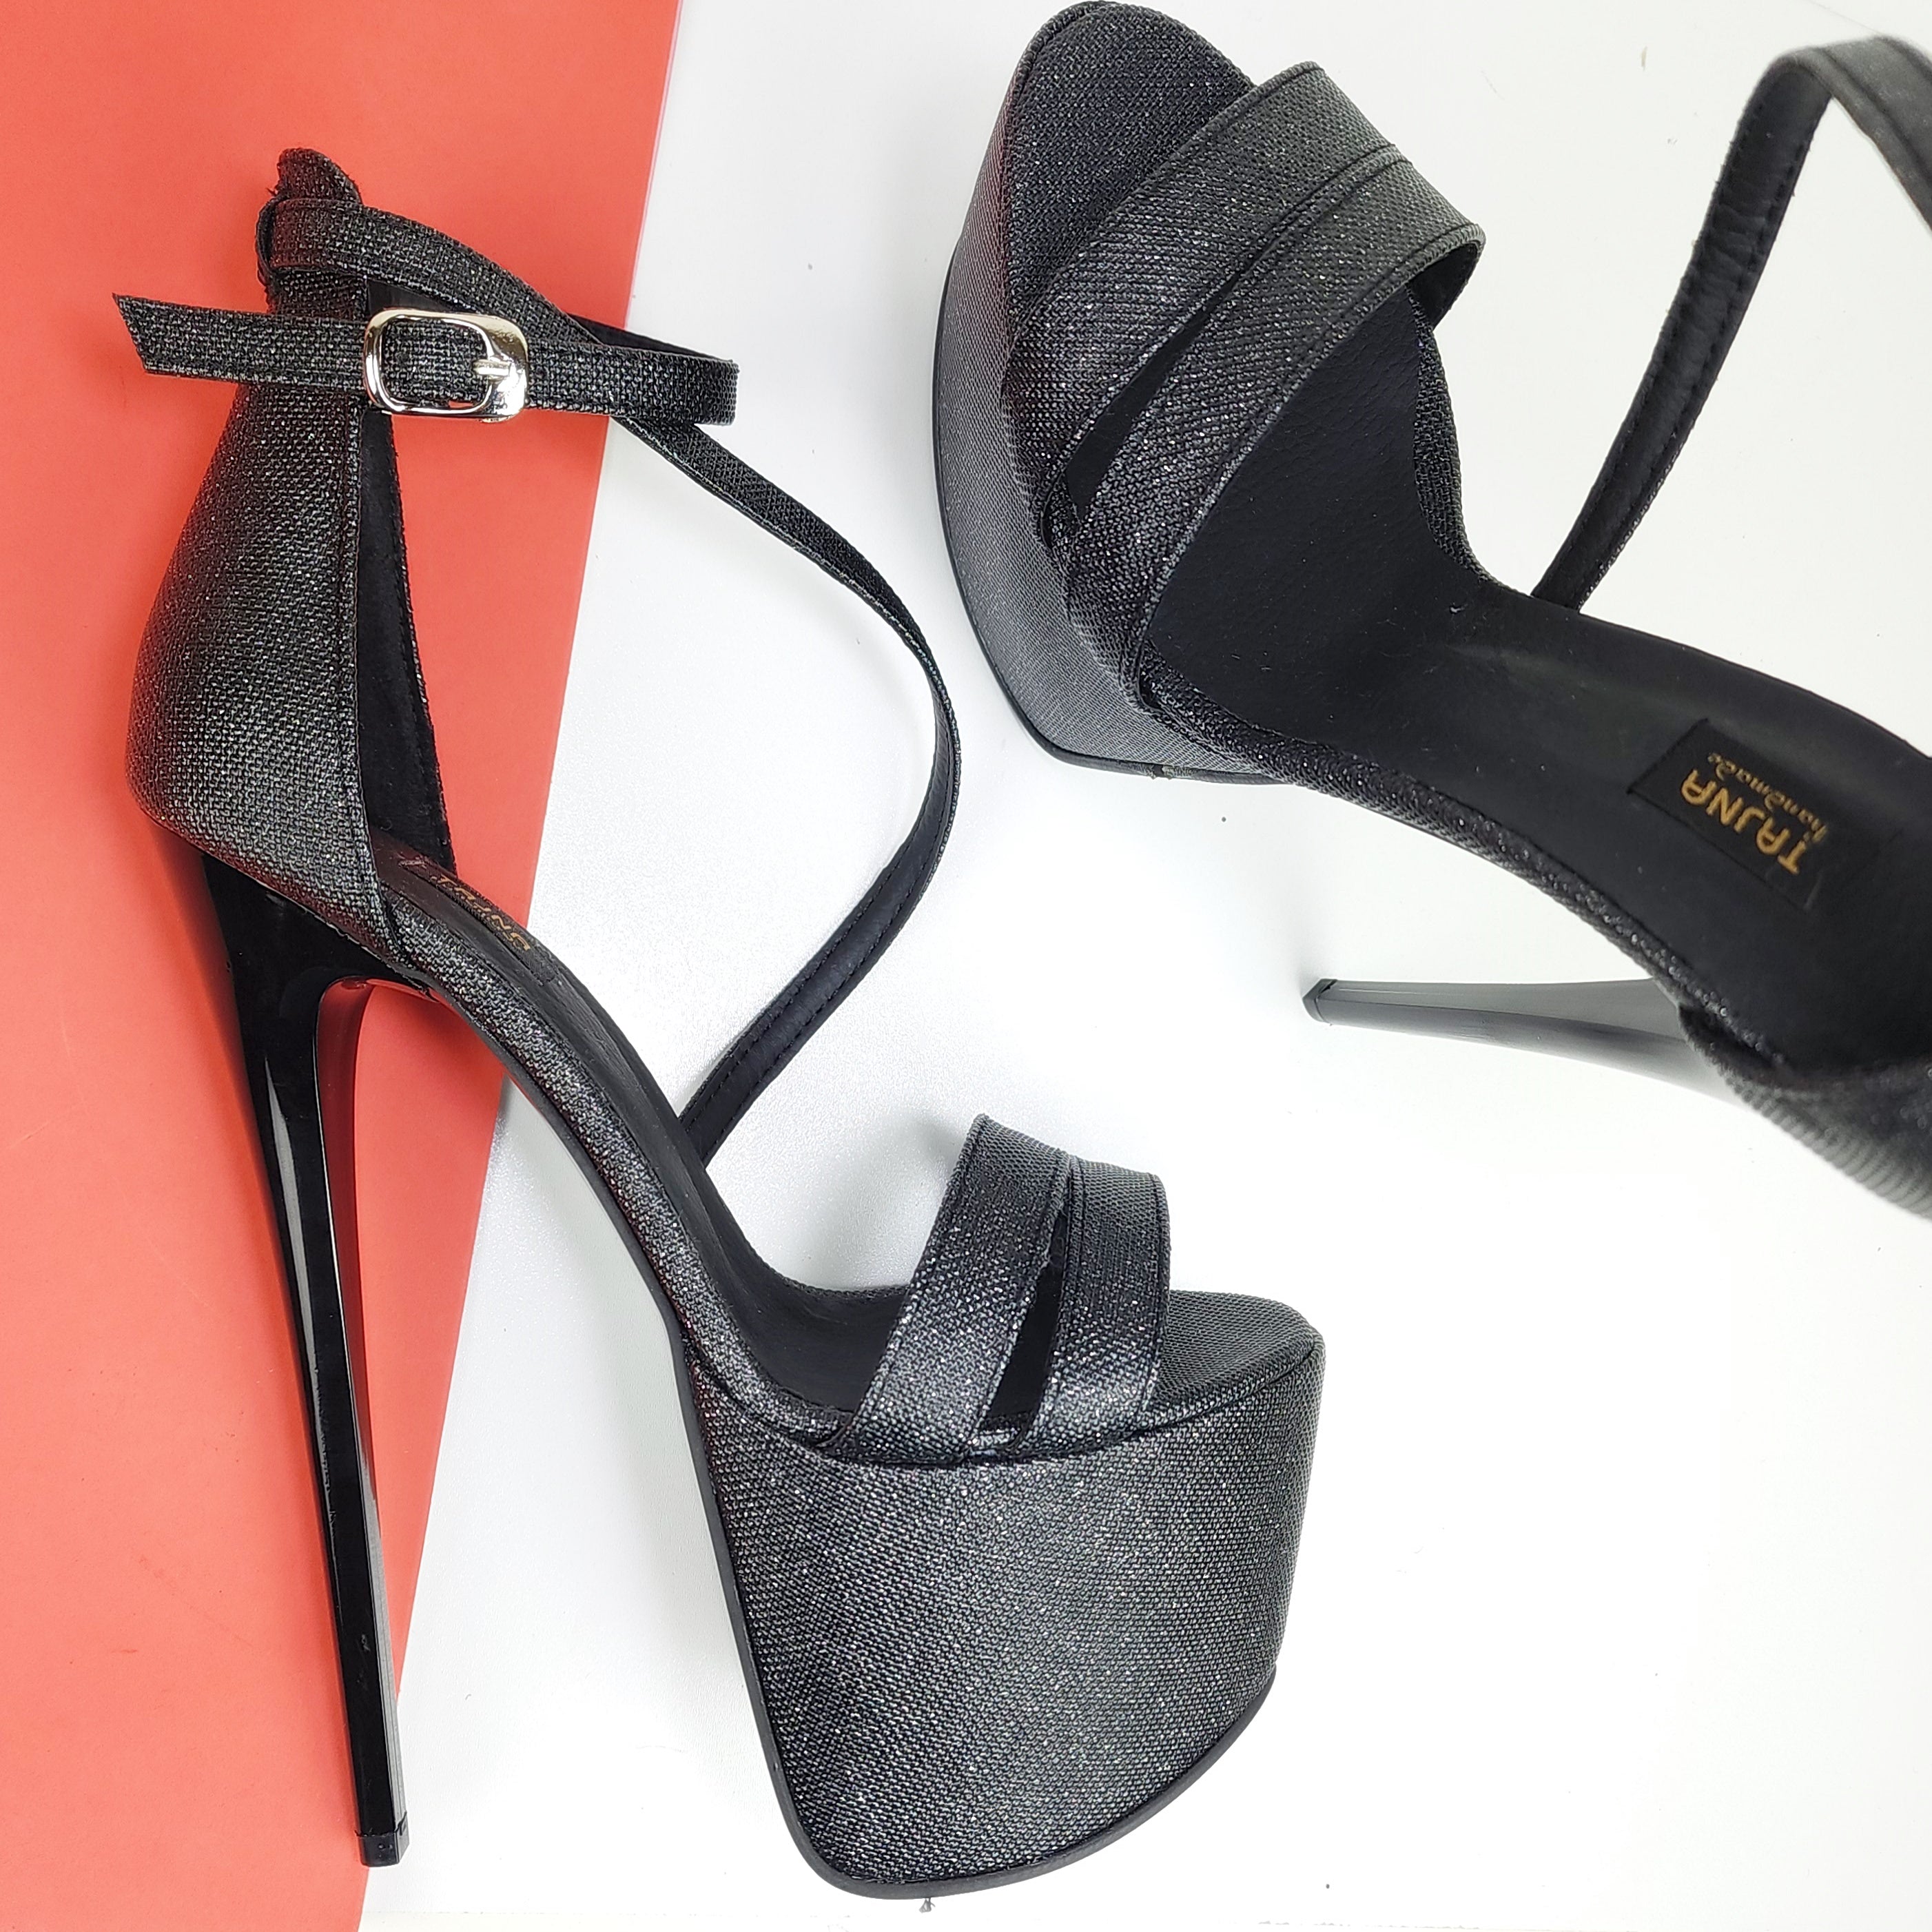 Gray Black Shimmer Print High Heel Sandals